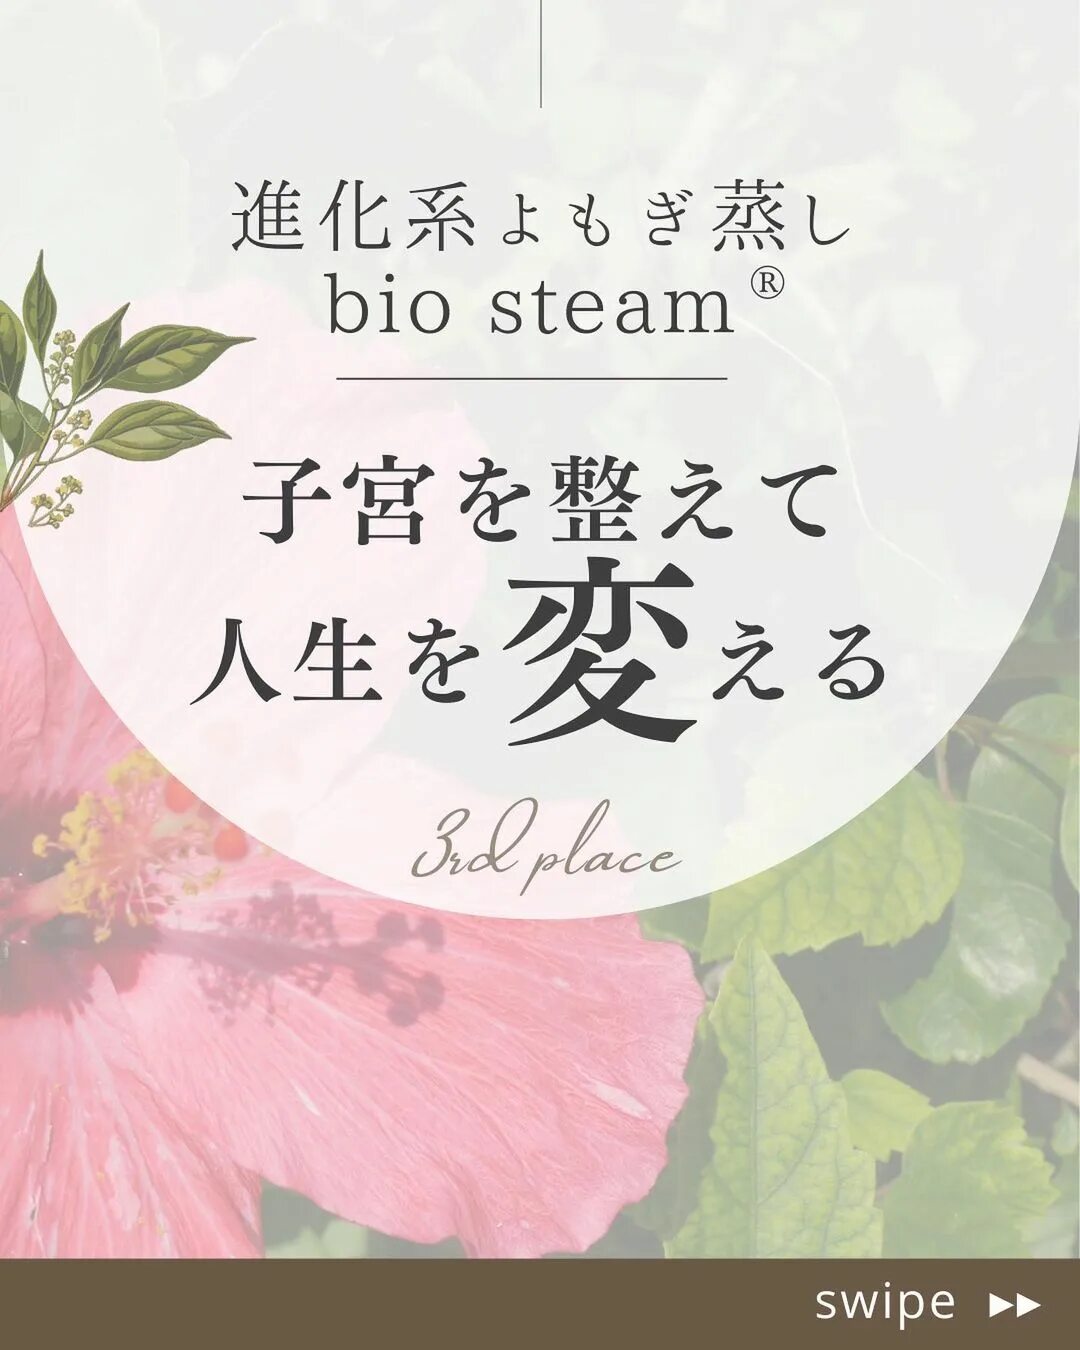 Bio steam технология фото 8